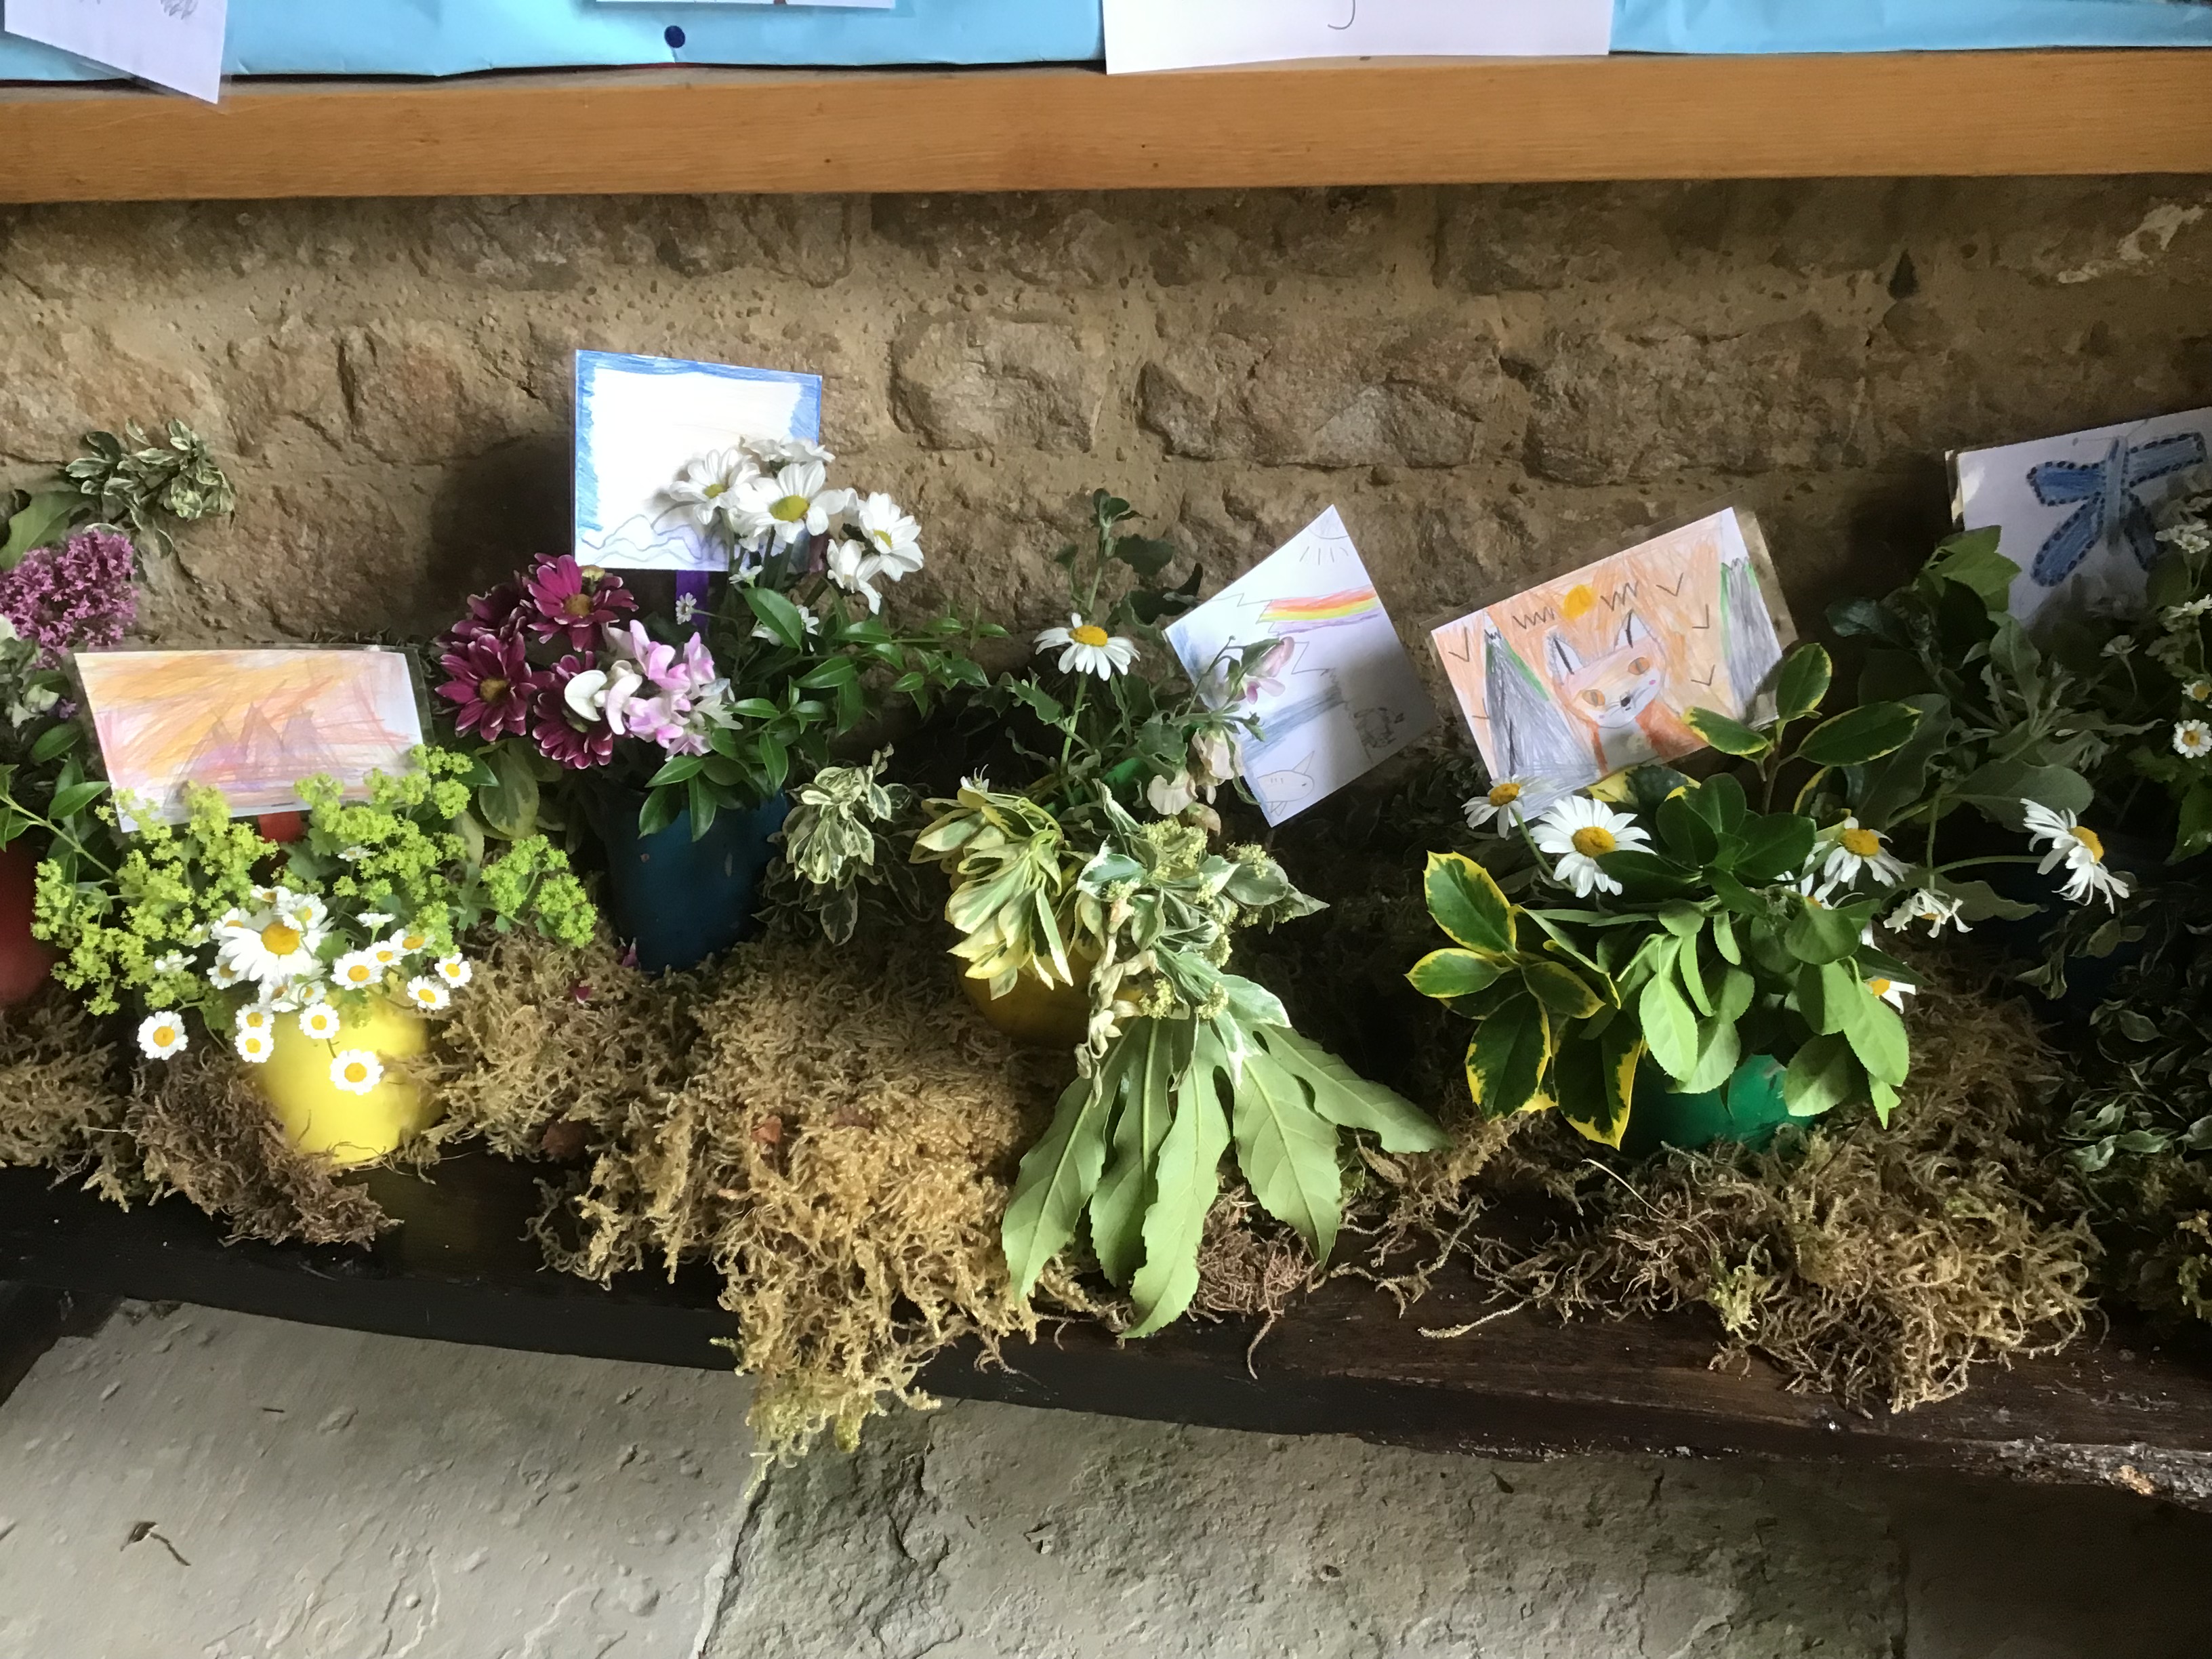 Patronal Flowers in Willersey Church June 2021